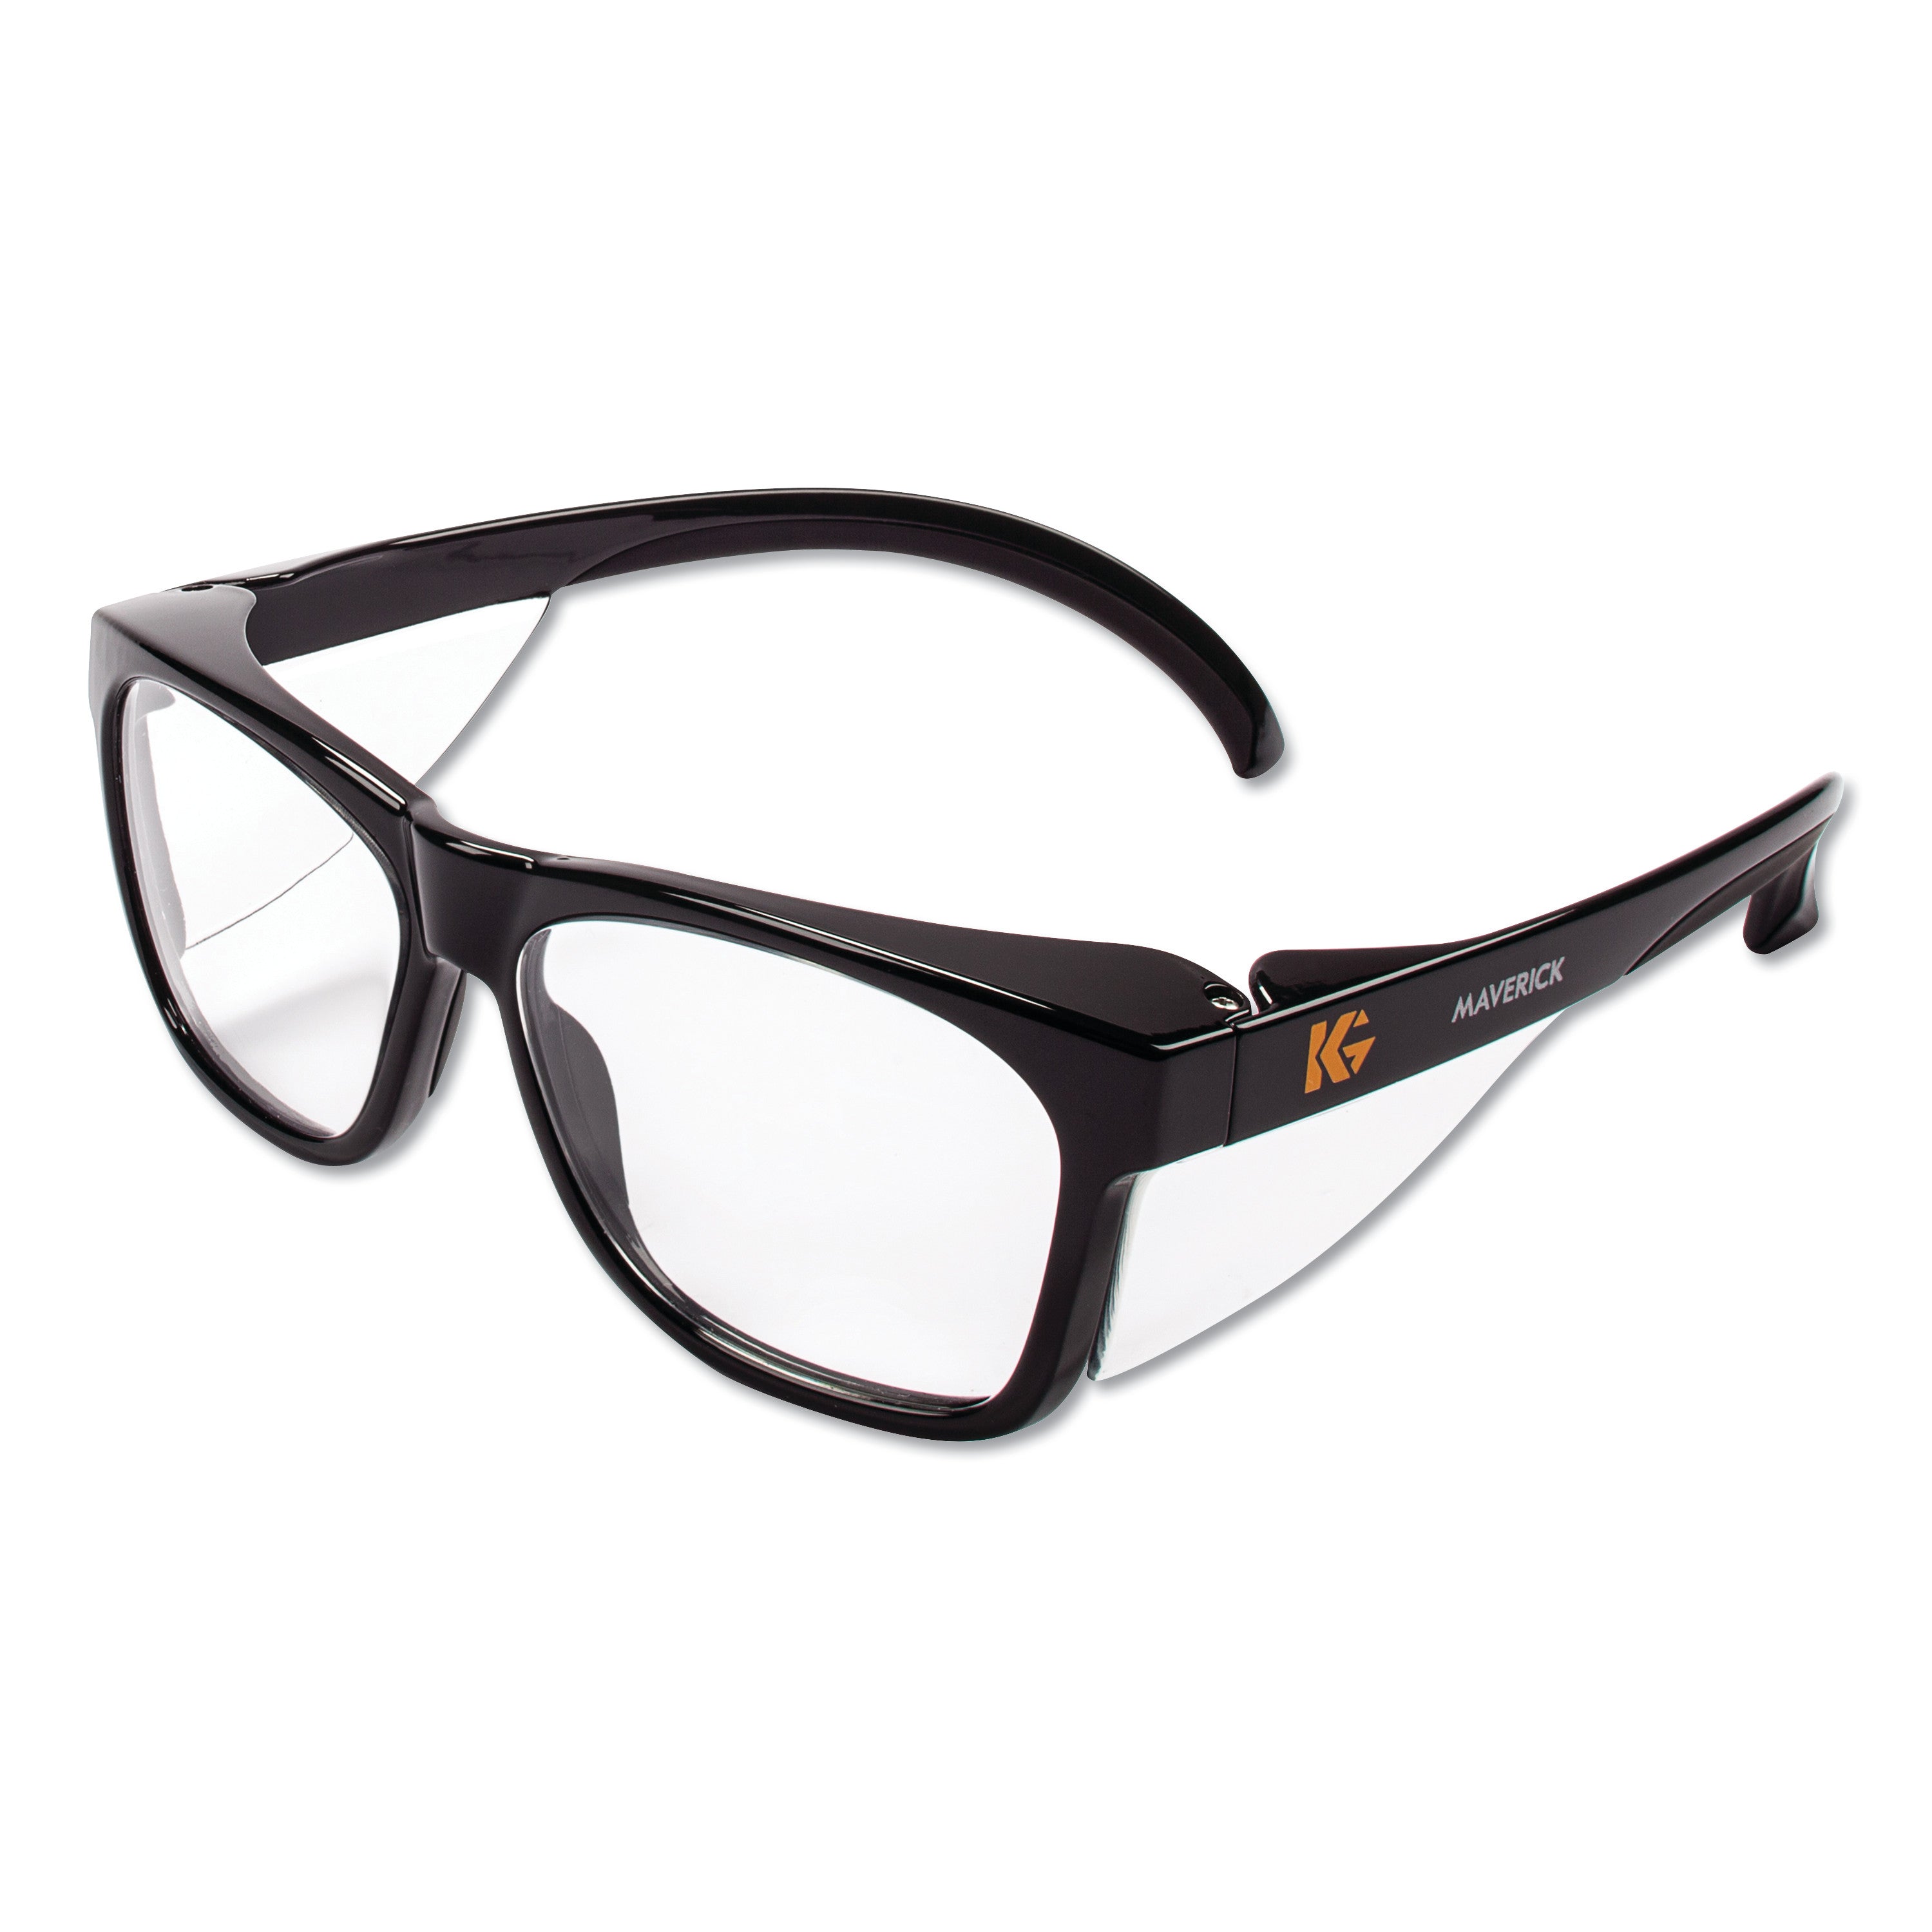 maverick-safety-glasses-black-polycarbonate-frame-clear-lens-12-box_kcc49309 - 1